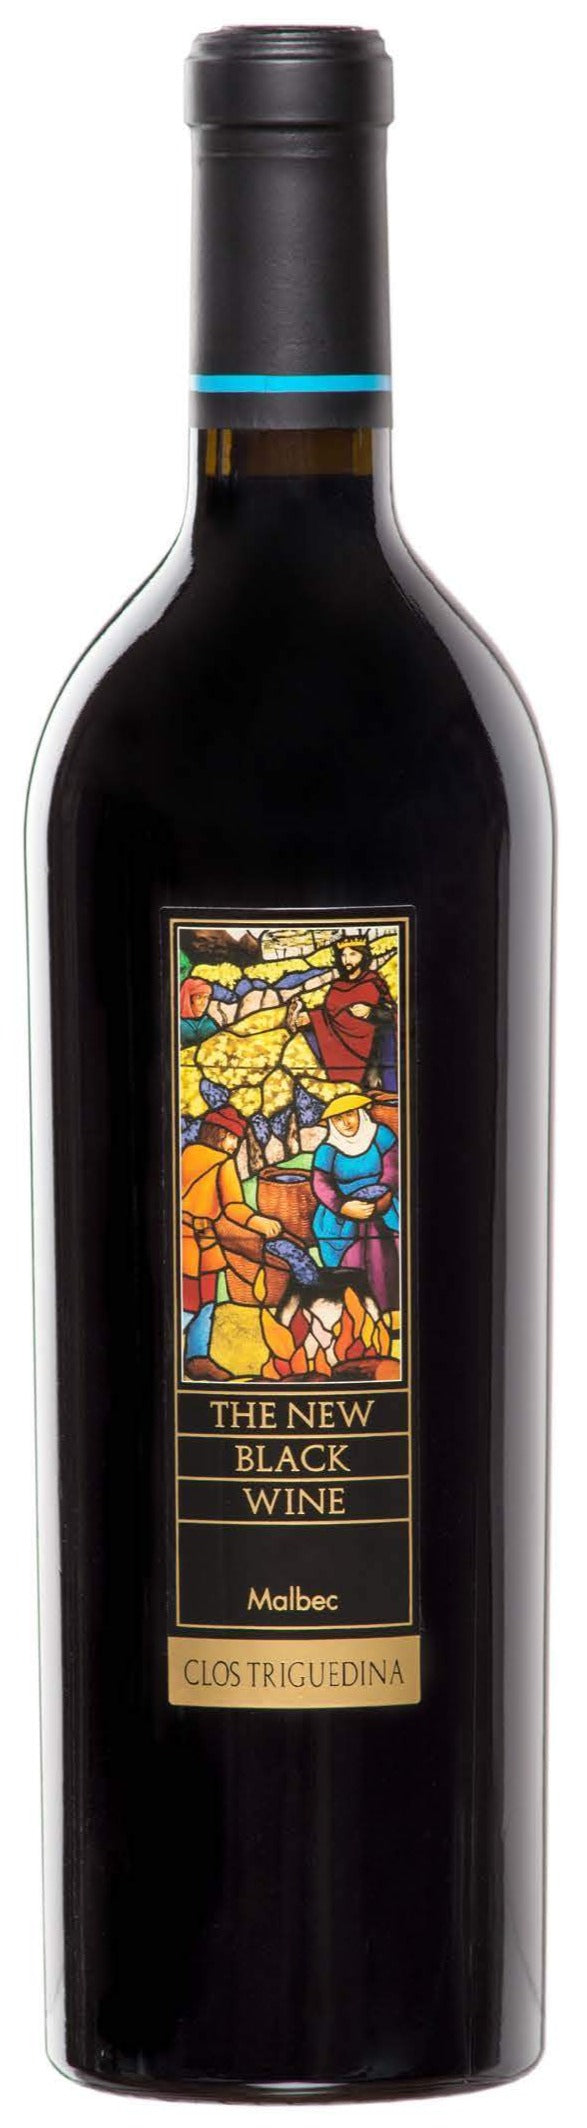 Clos Triguedina The New Black Wine 2010 / 2011